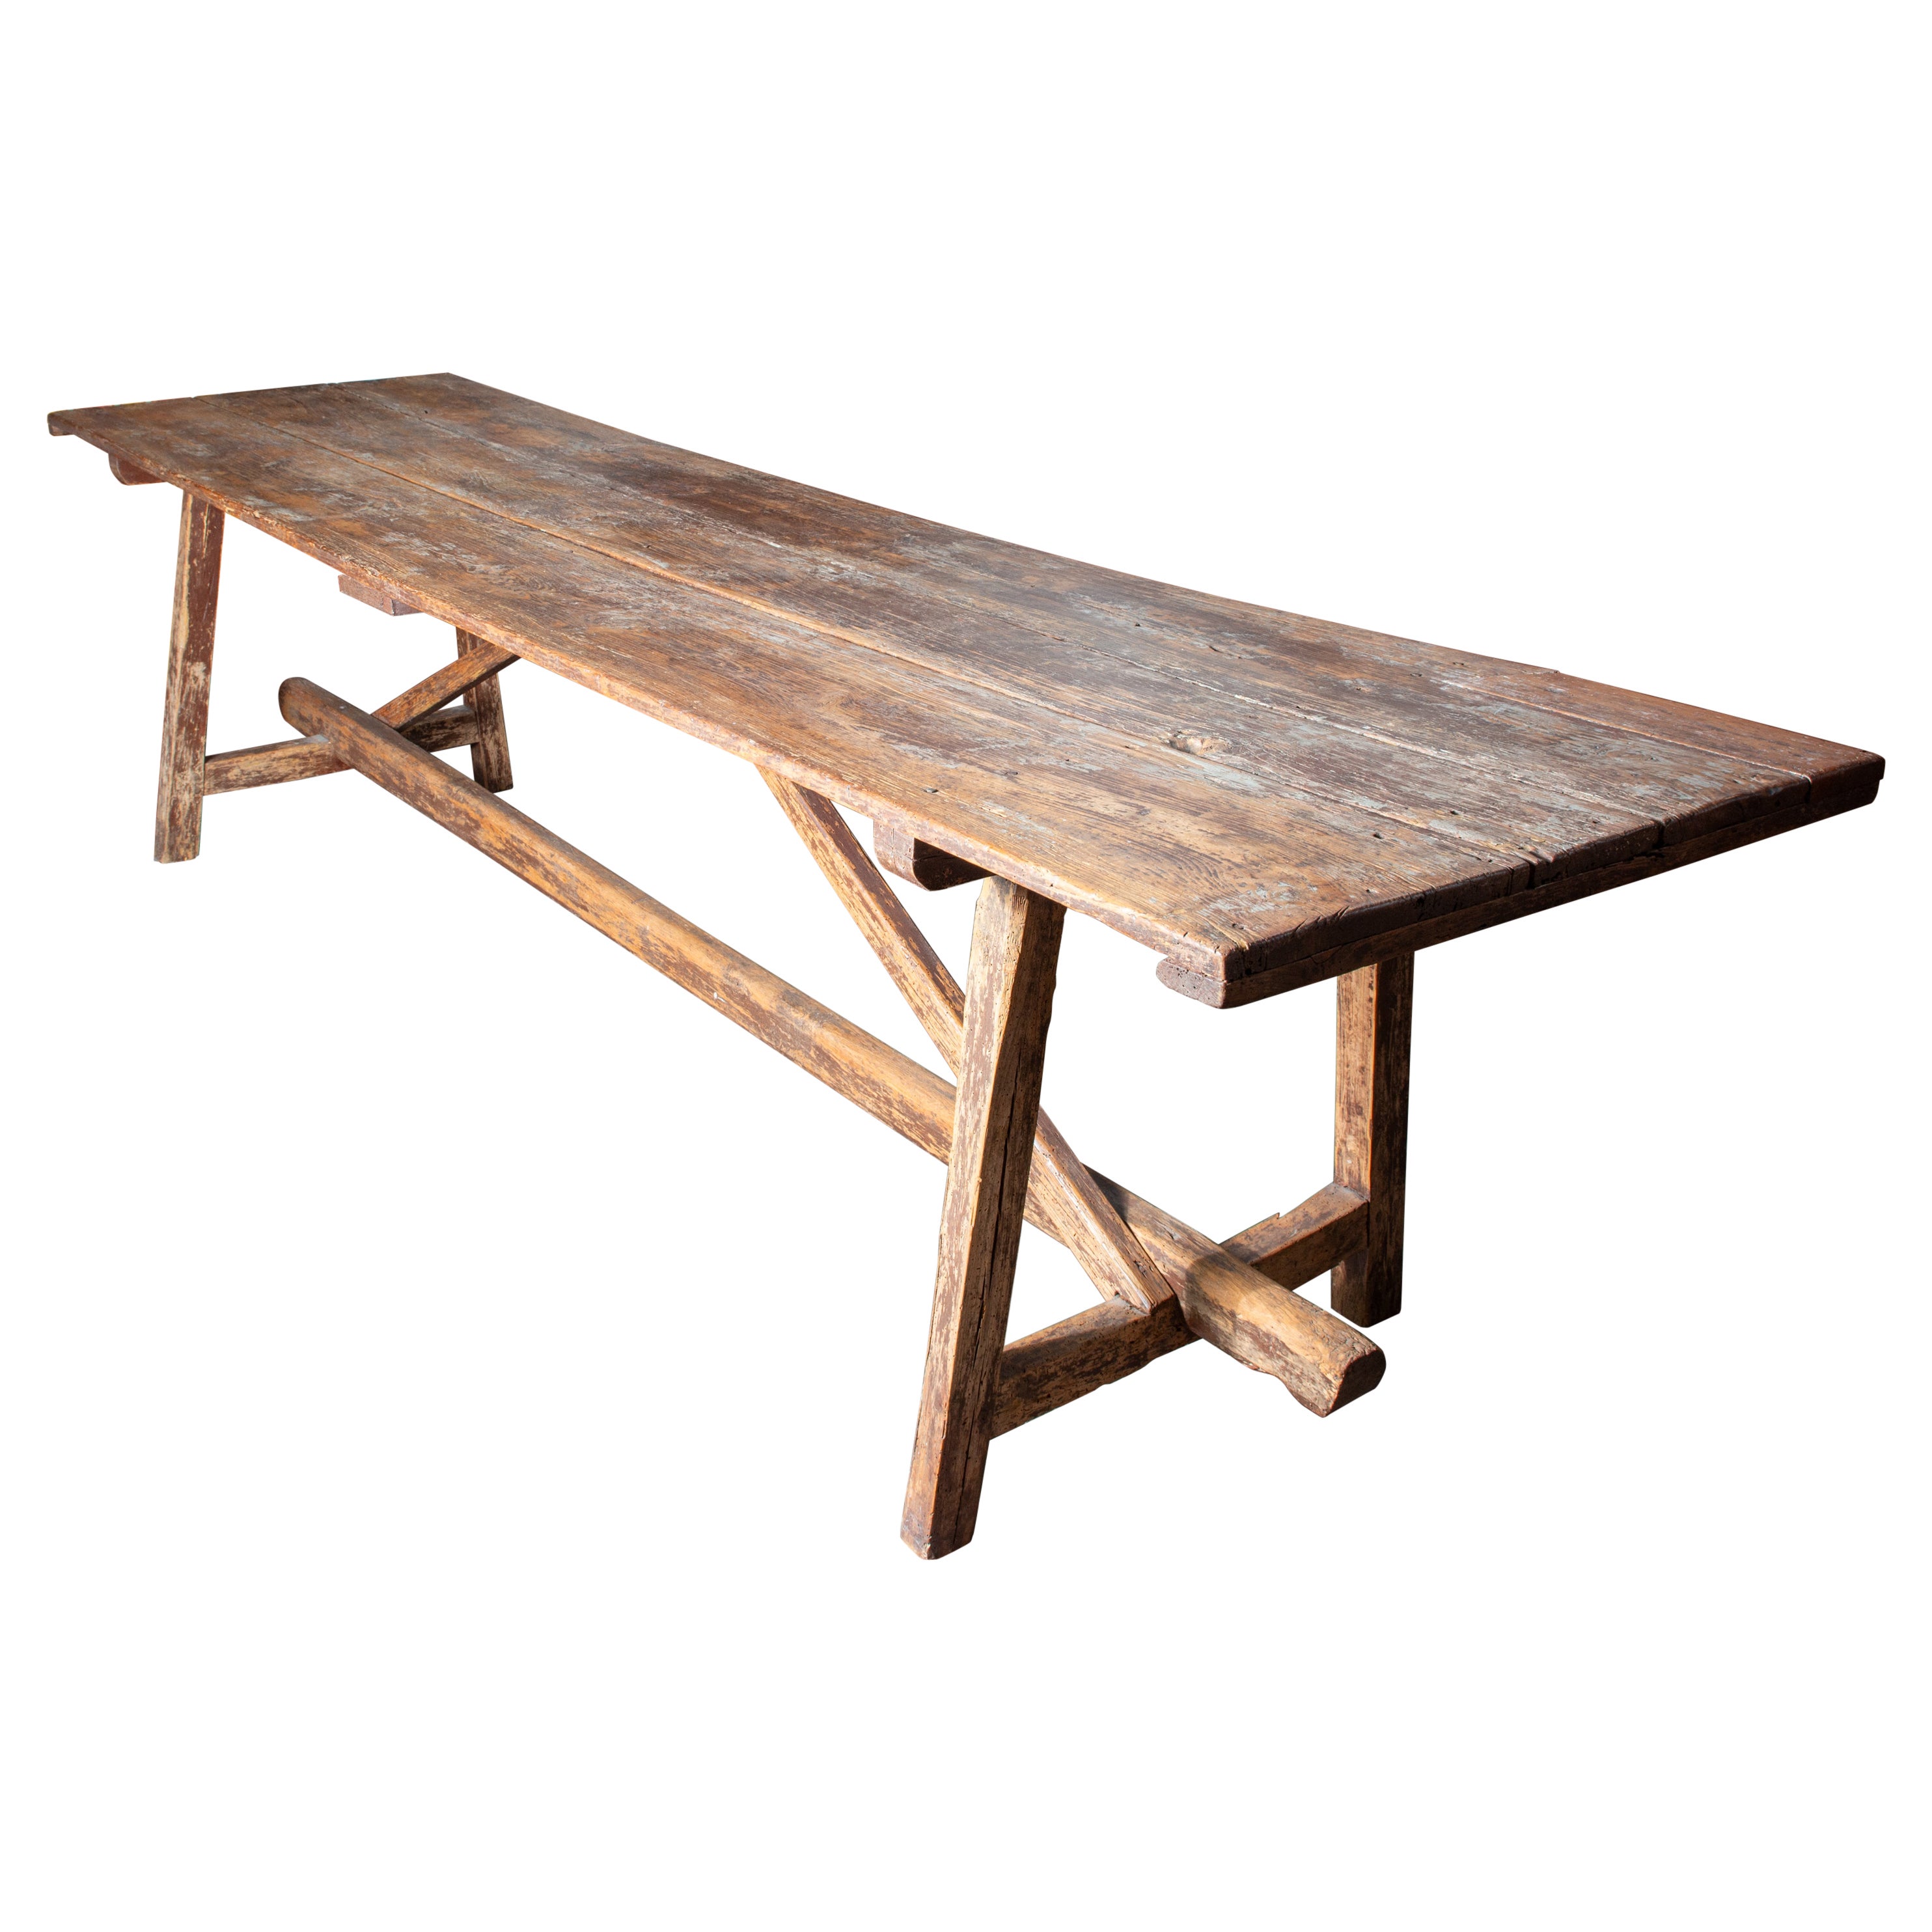 Rustic Dutch Farm Table For Sale